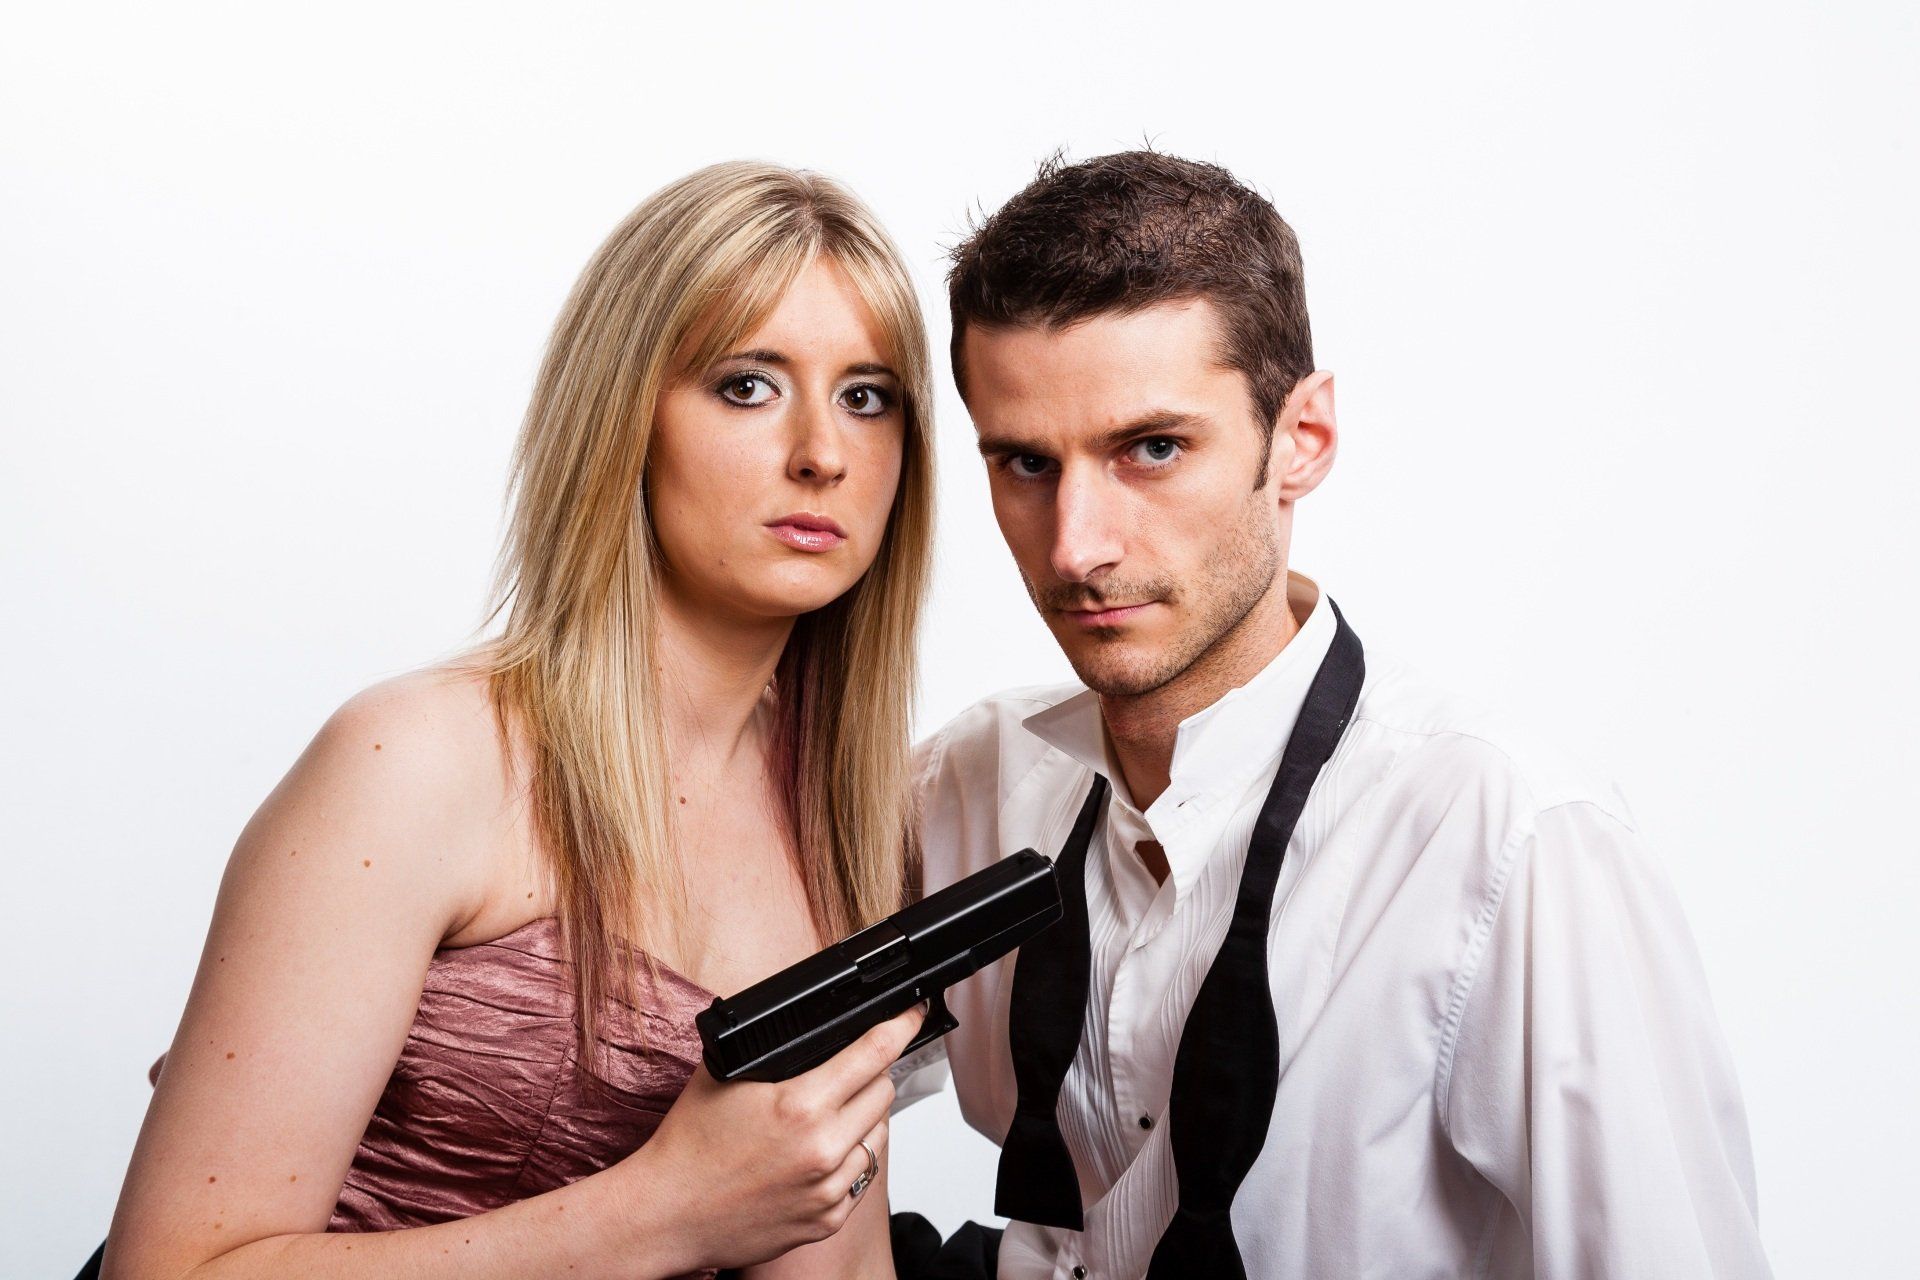 Couple with handgun